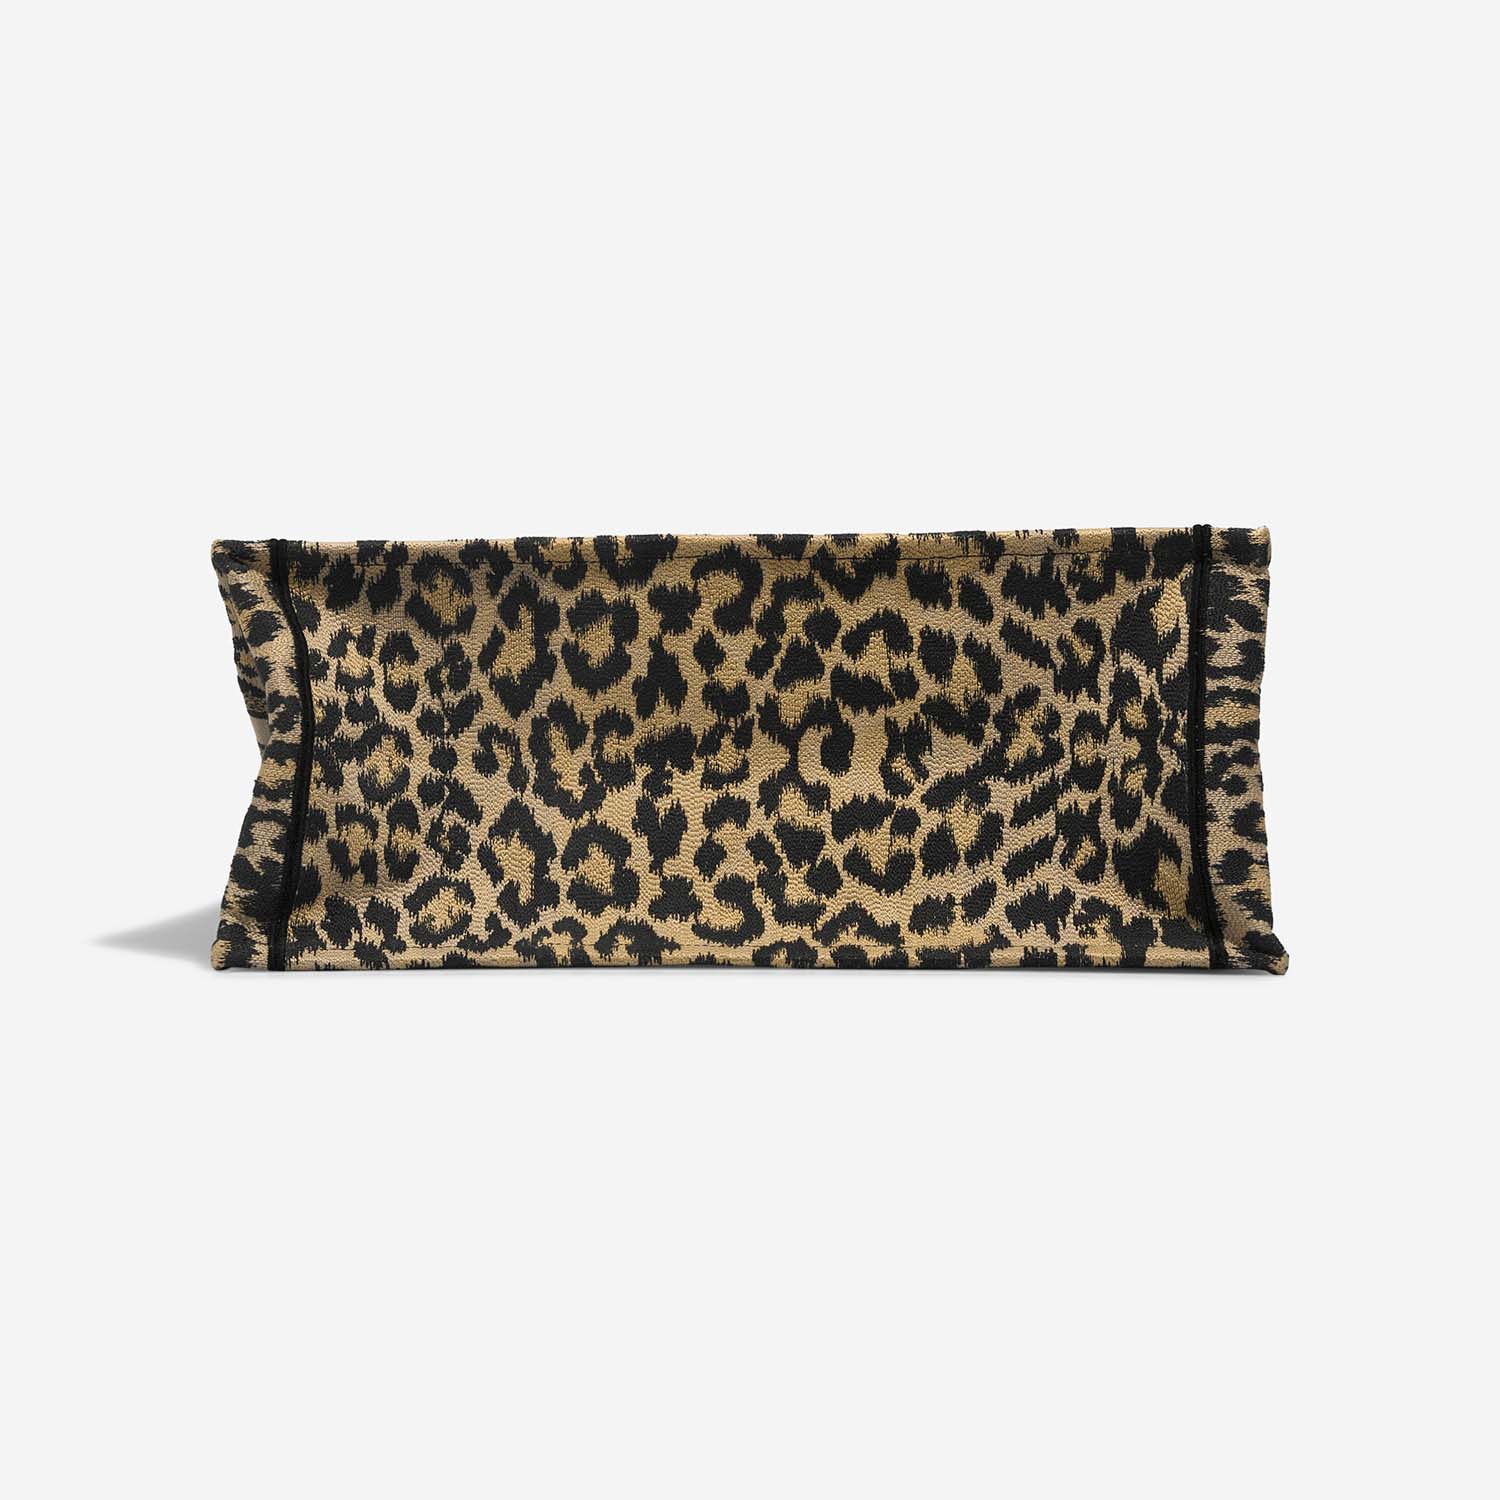 Dior BookTote Large Leopard Bottom  | Sell your designer bag on Saclab.com